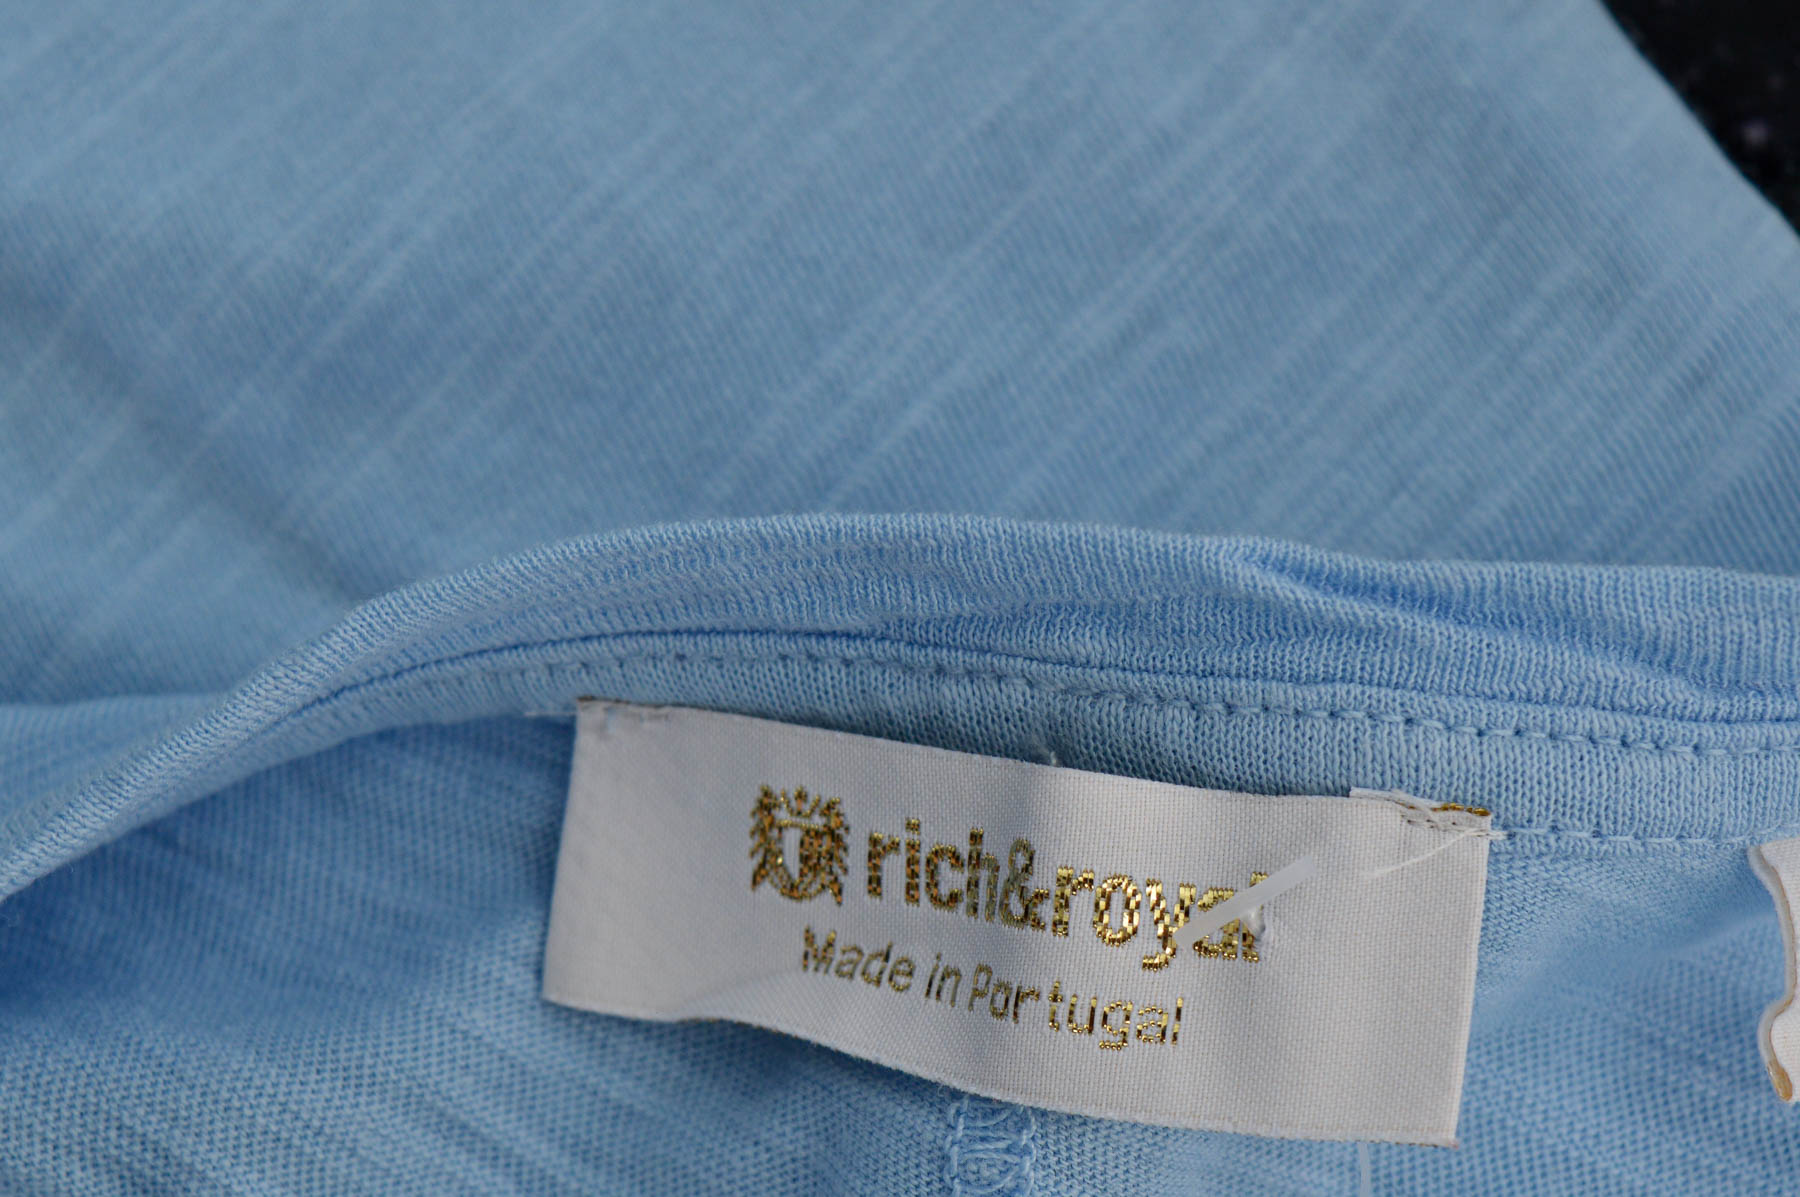 Tricou de damă - Rich & Royal - 2